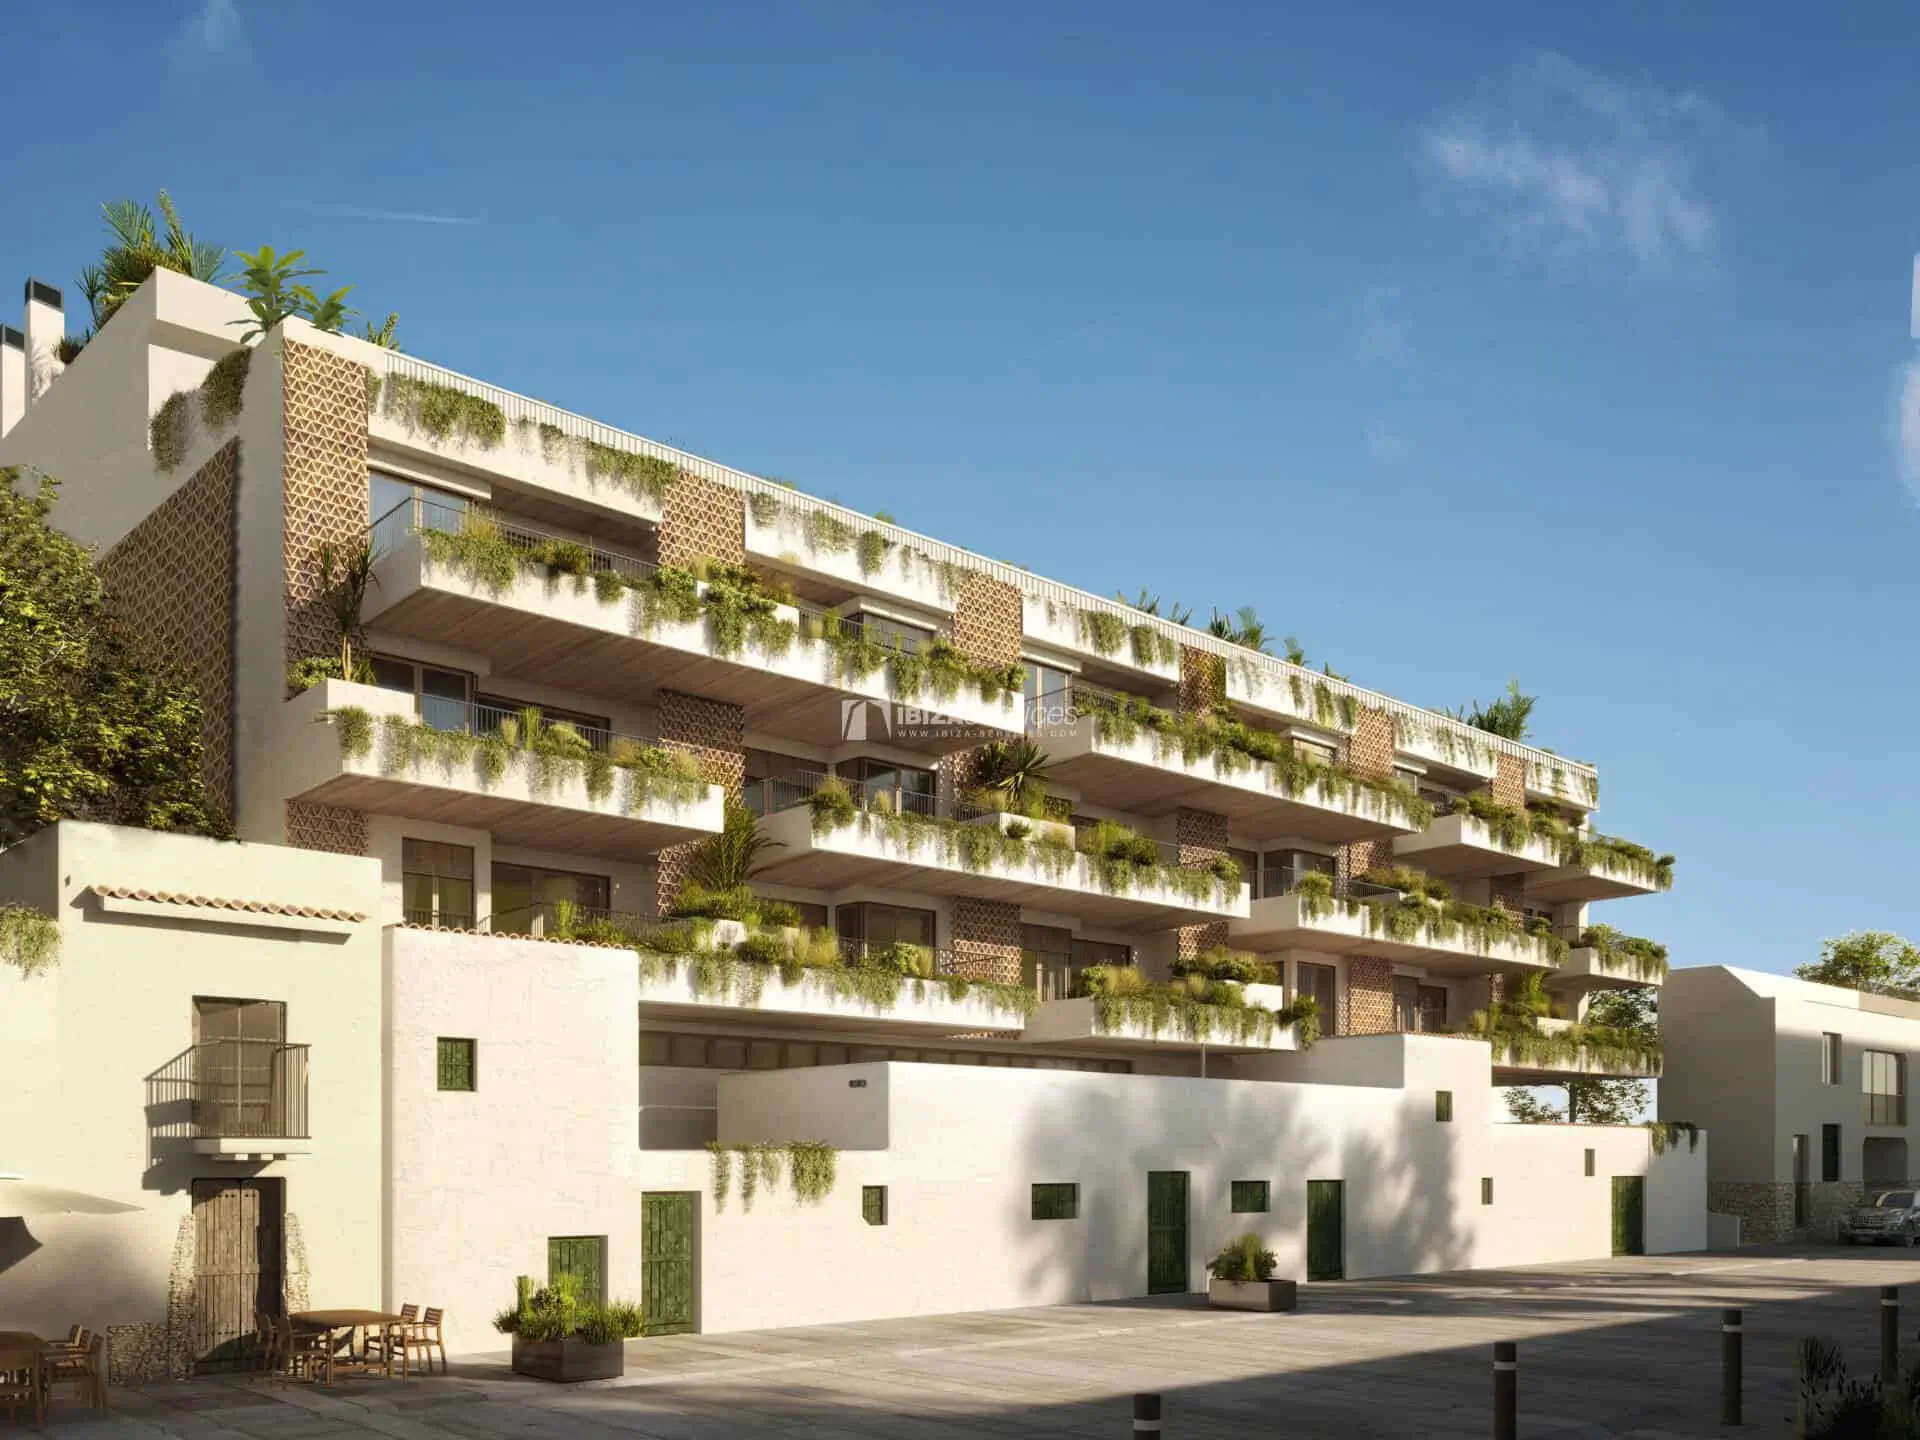 Neues Wohnprojekt mit 57 Häusern in Santa Eulalia, Ibiza